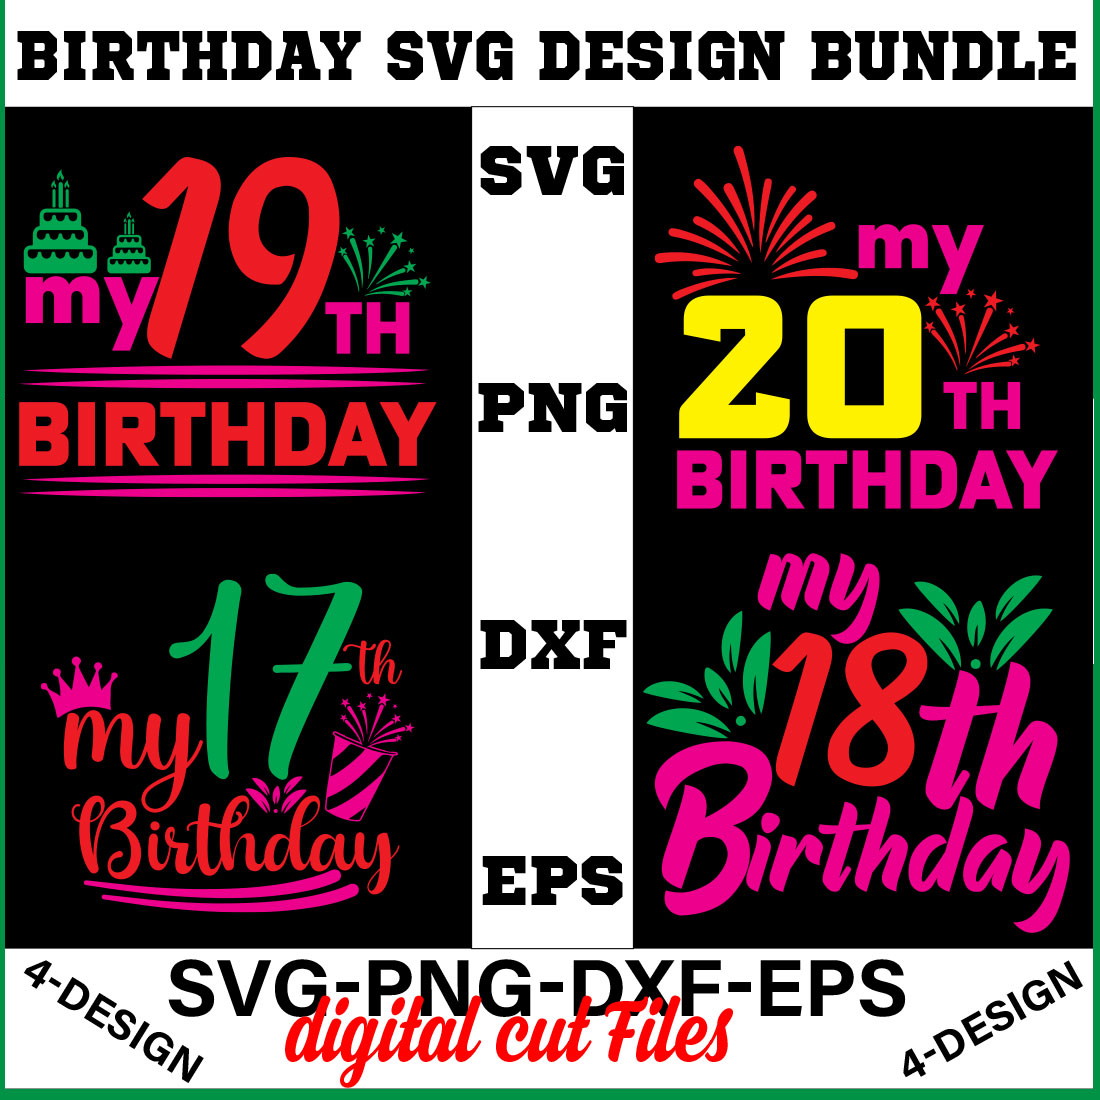 birthday svg design bundle Happy birthday svg bundle hand lettered birthday svg birthday party svg Volume-05 cover image.